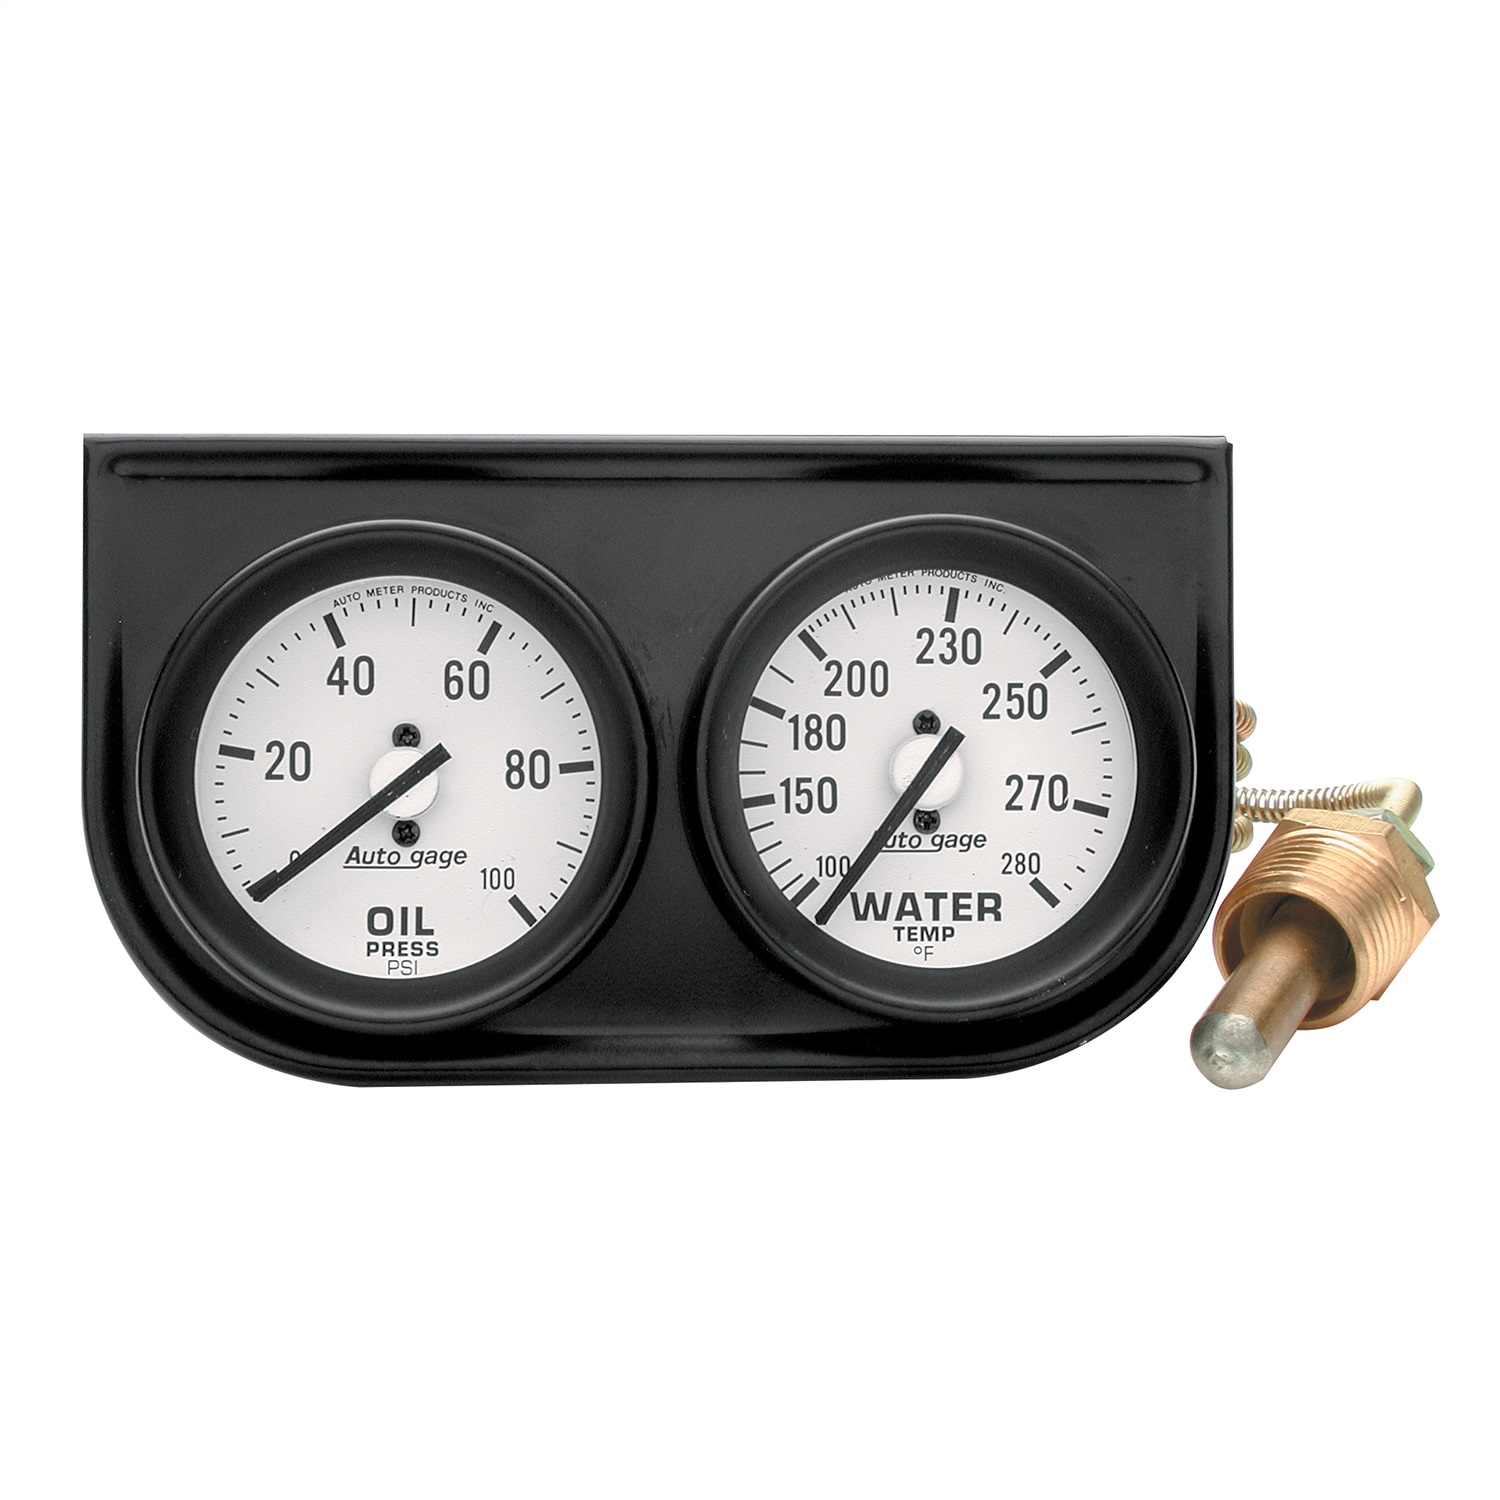 Auto Meter Auto Meter 2326 Autogage; Mechanical Oil/Water; Black Console